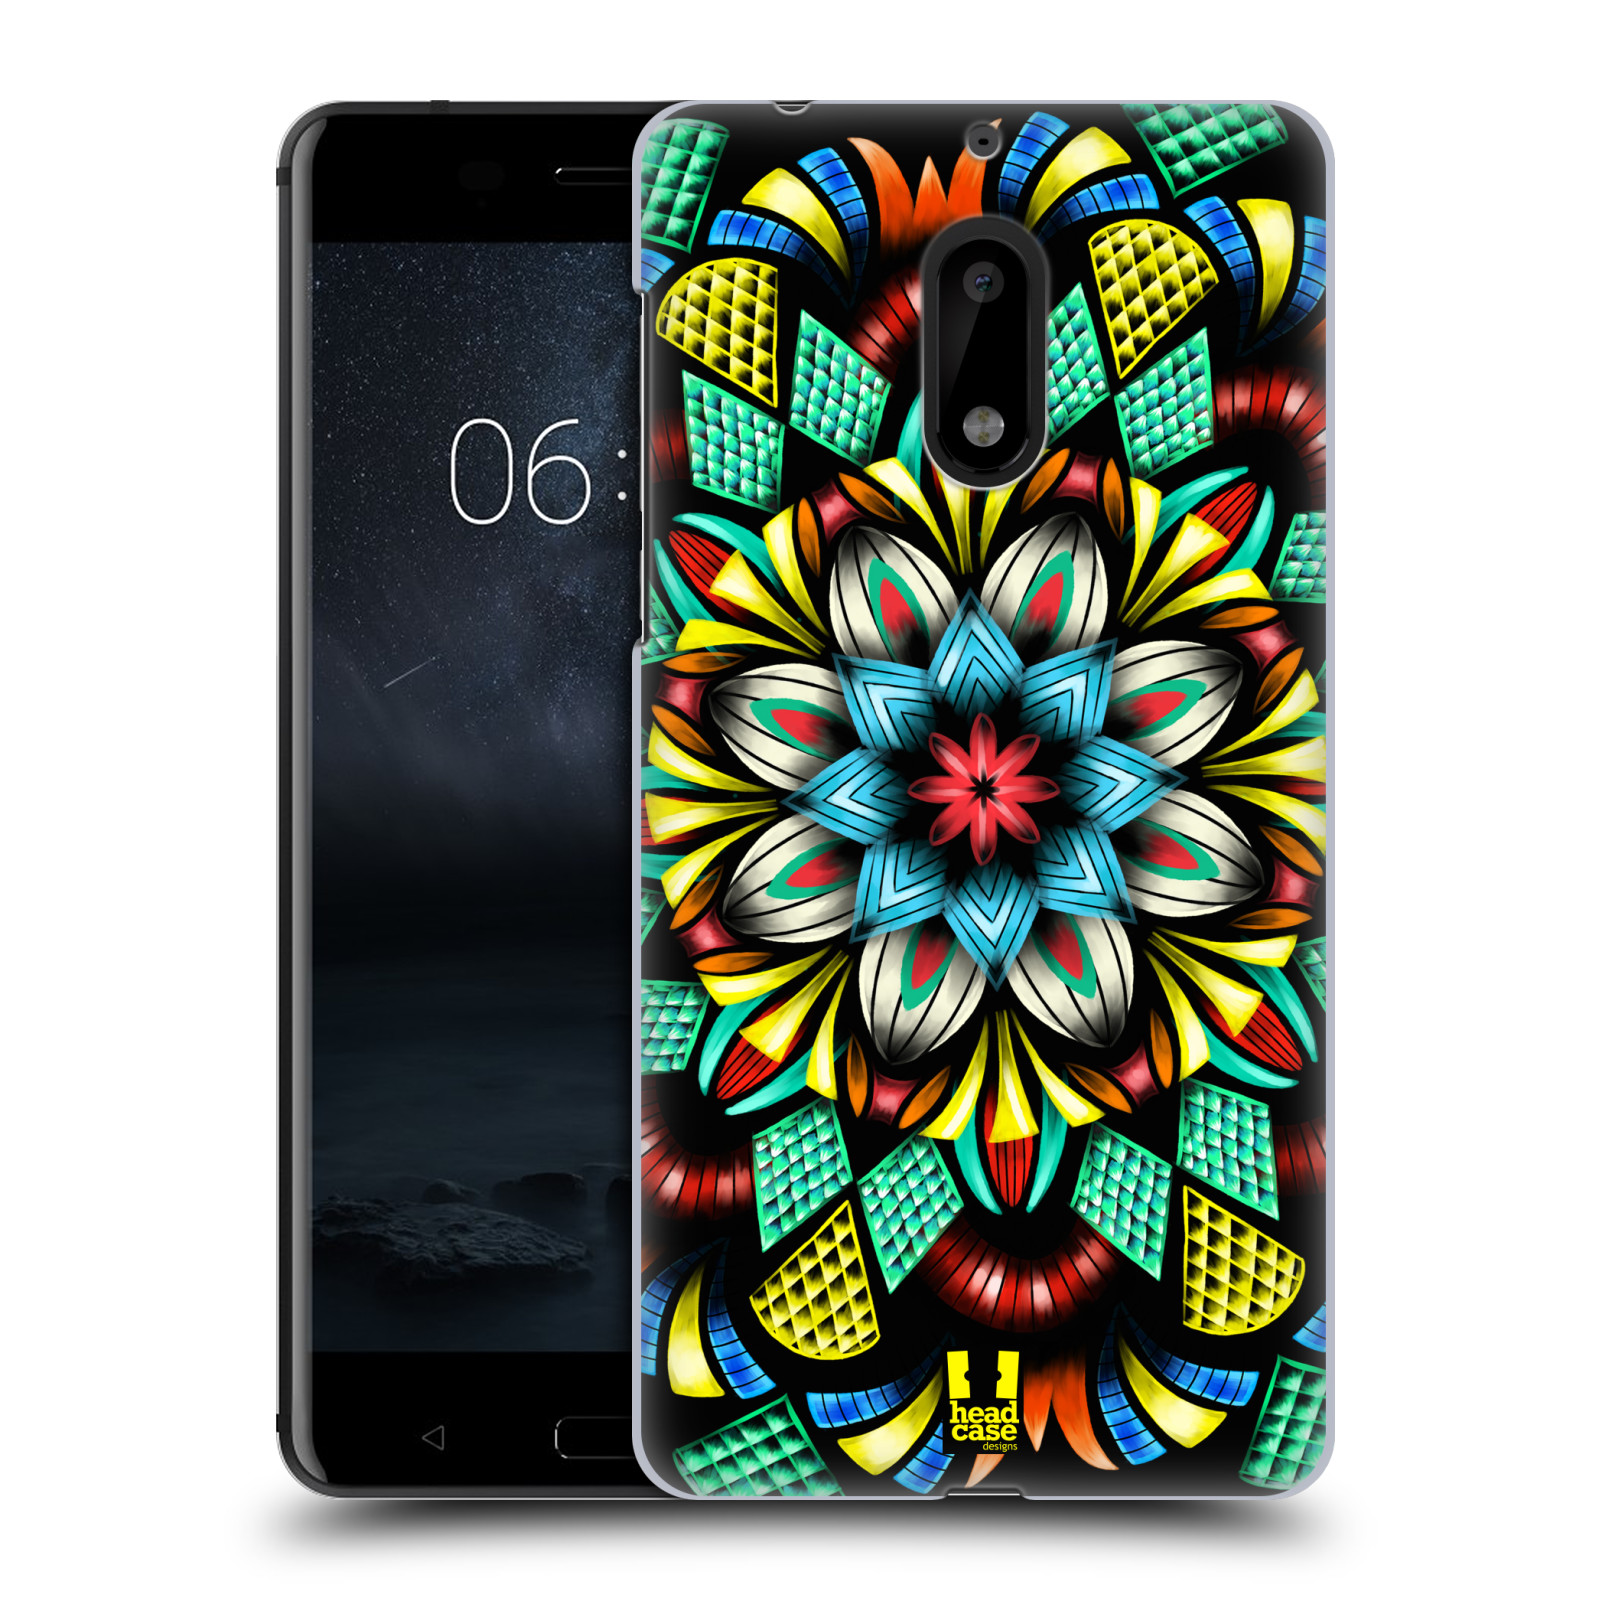 HEAD CASE plastový obal na mobil Nokia 6 vzor Indie Mandala kaleidoskop barevný vzor TRADIČNÍ